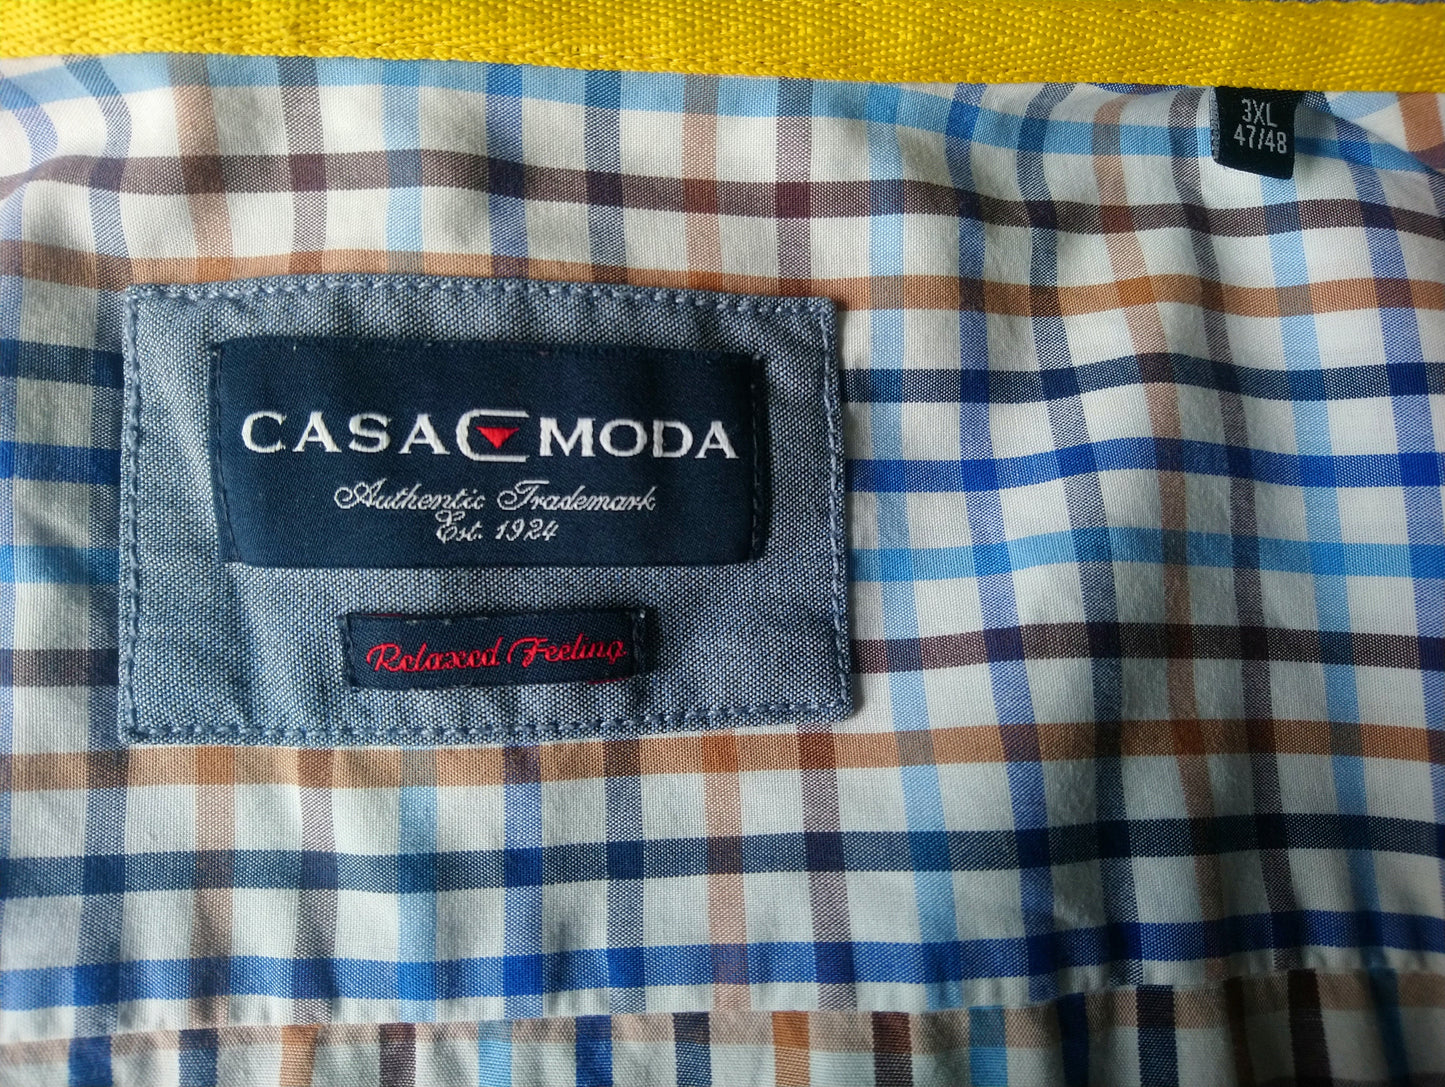 Casa Moda overhemd. Blauw Wit Bruin geblokt. Maat 3XL / XXXL.